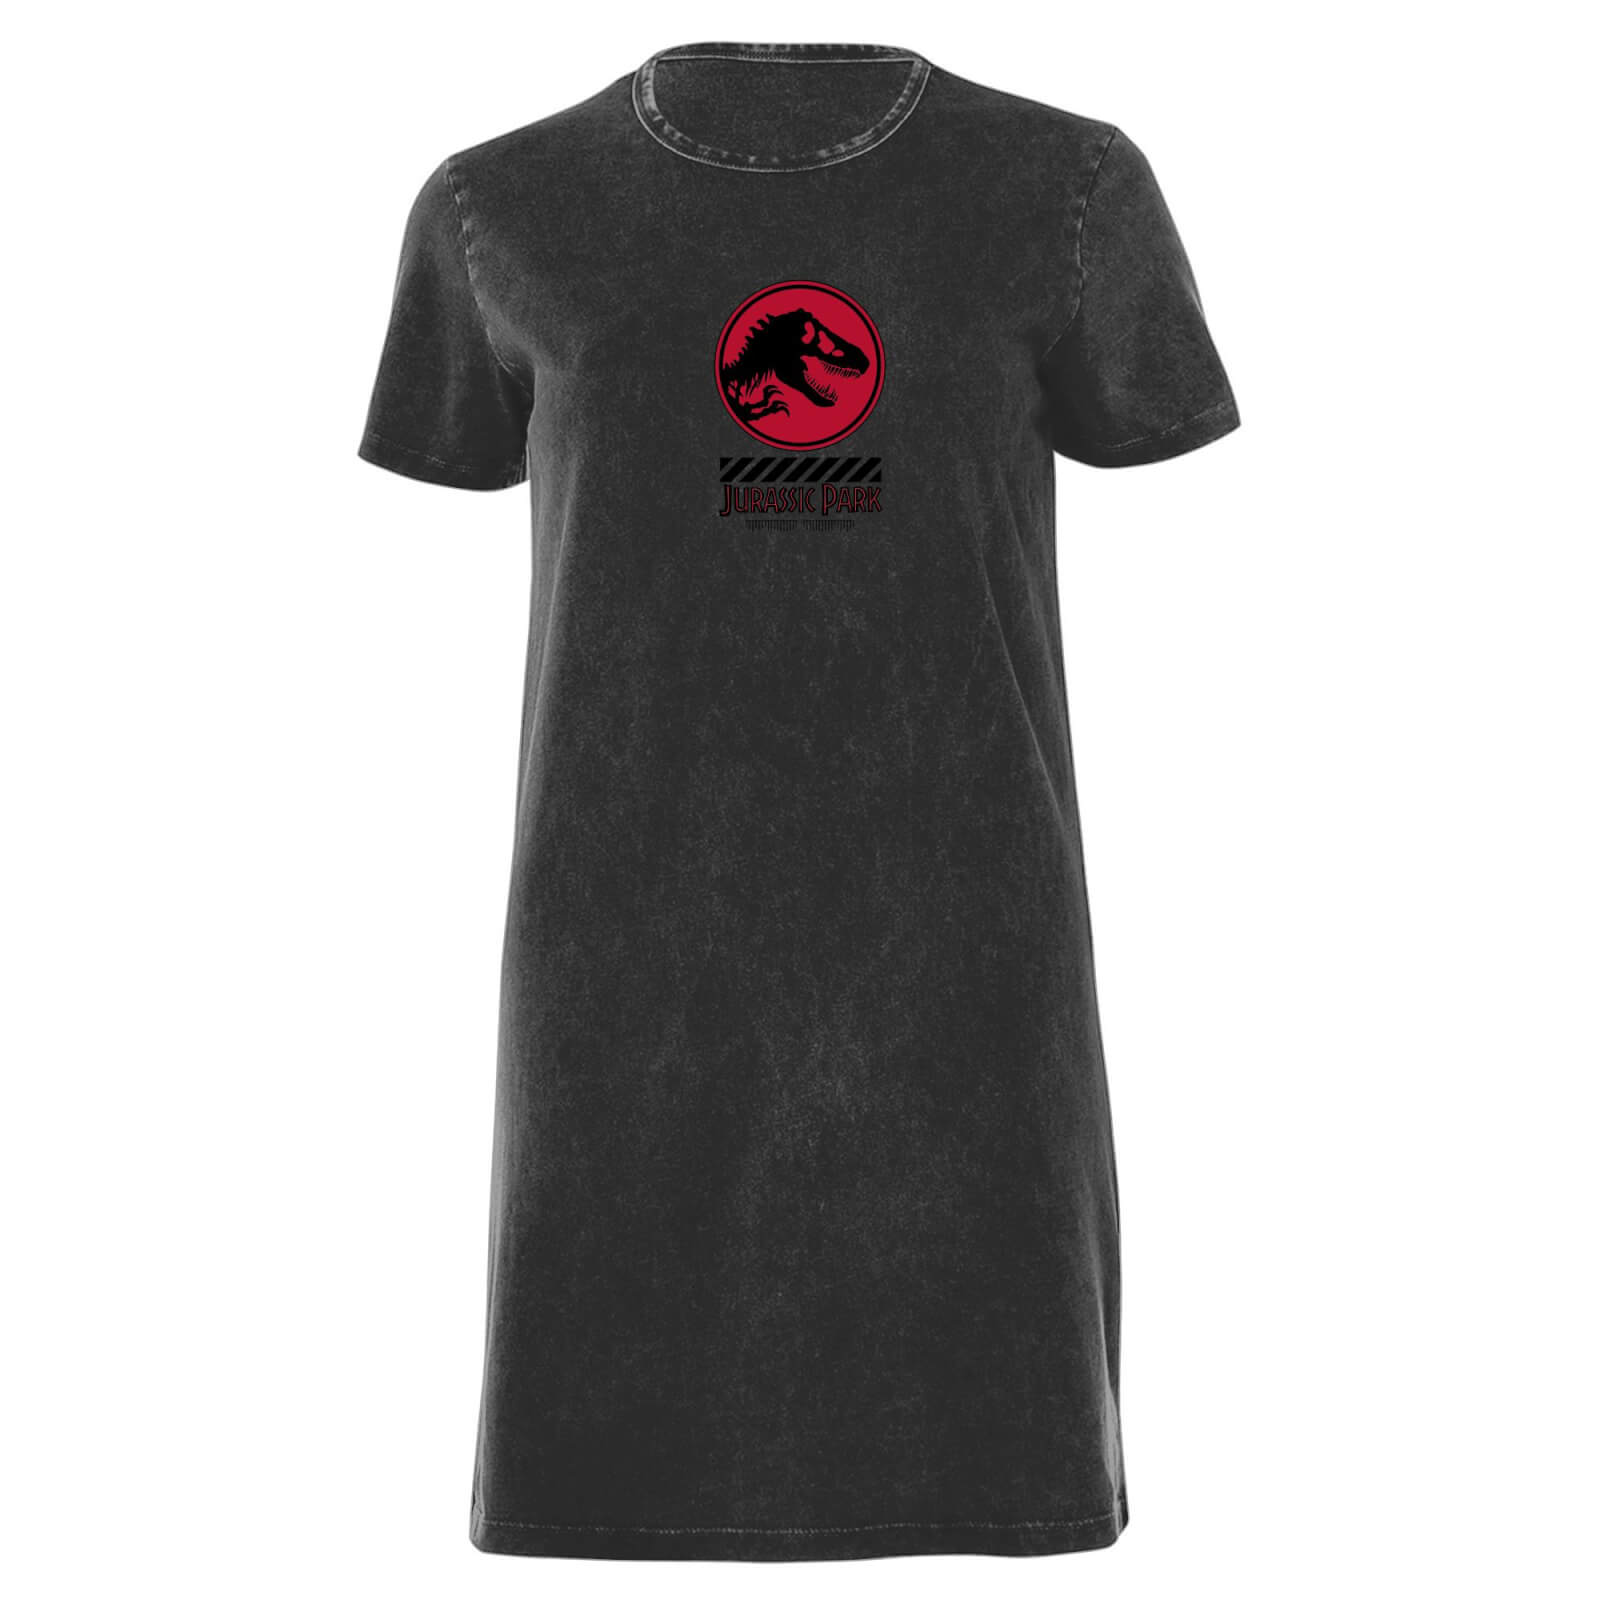 Jurassic Park Women's T-Shirt Dress - Black Acid Wash - S - Black Acid Wash